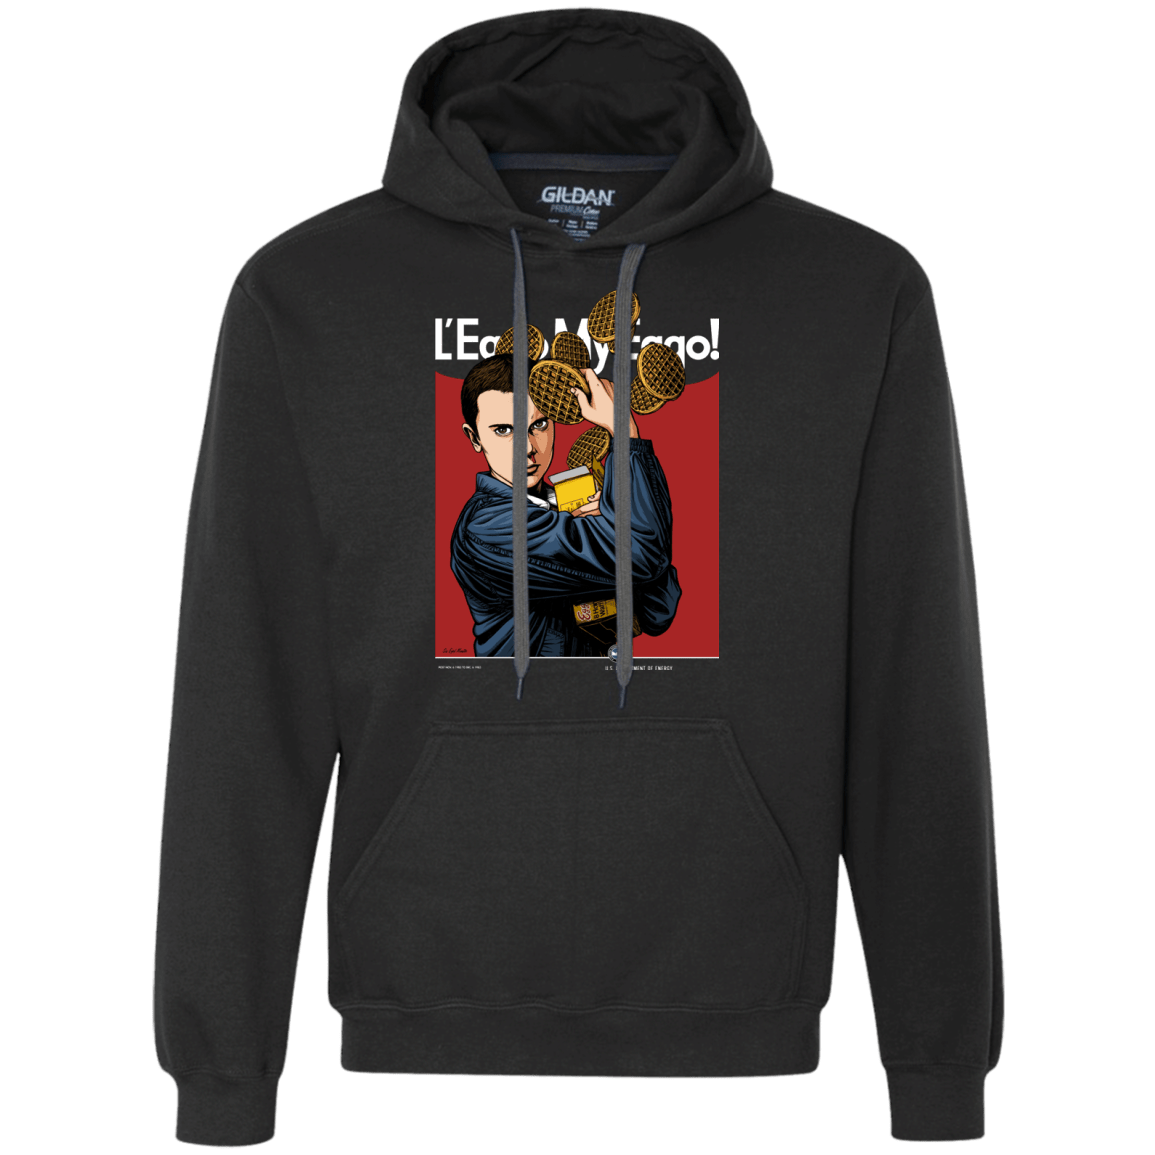 Sweatshirts Black / Small Eleven Premium Fleece Hoodie